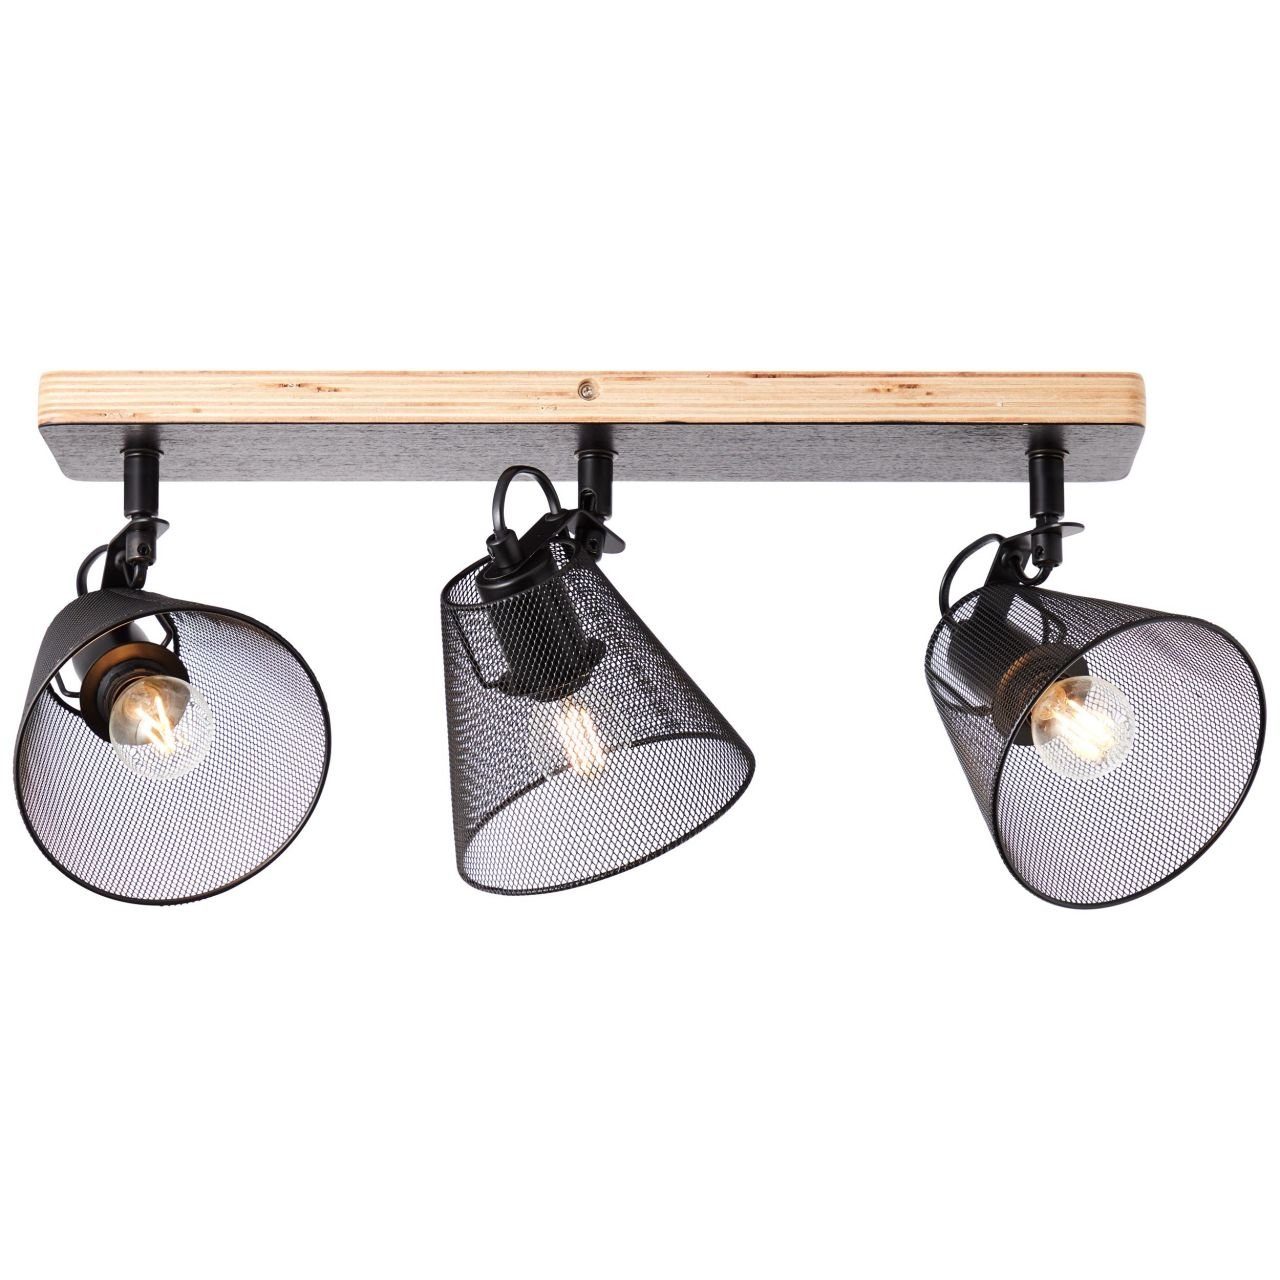 Lampe, schwarz/holzfarbend, 3x Whole 3flg D45 Deckenleuchte Spotbalken Metall/Holz, Whole, Brilliant